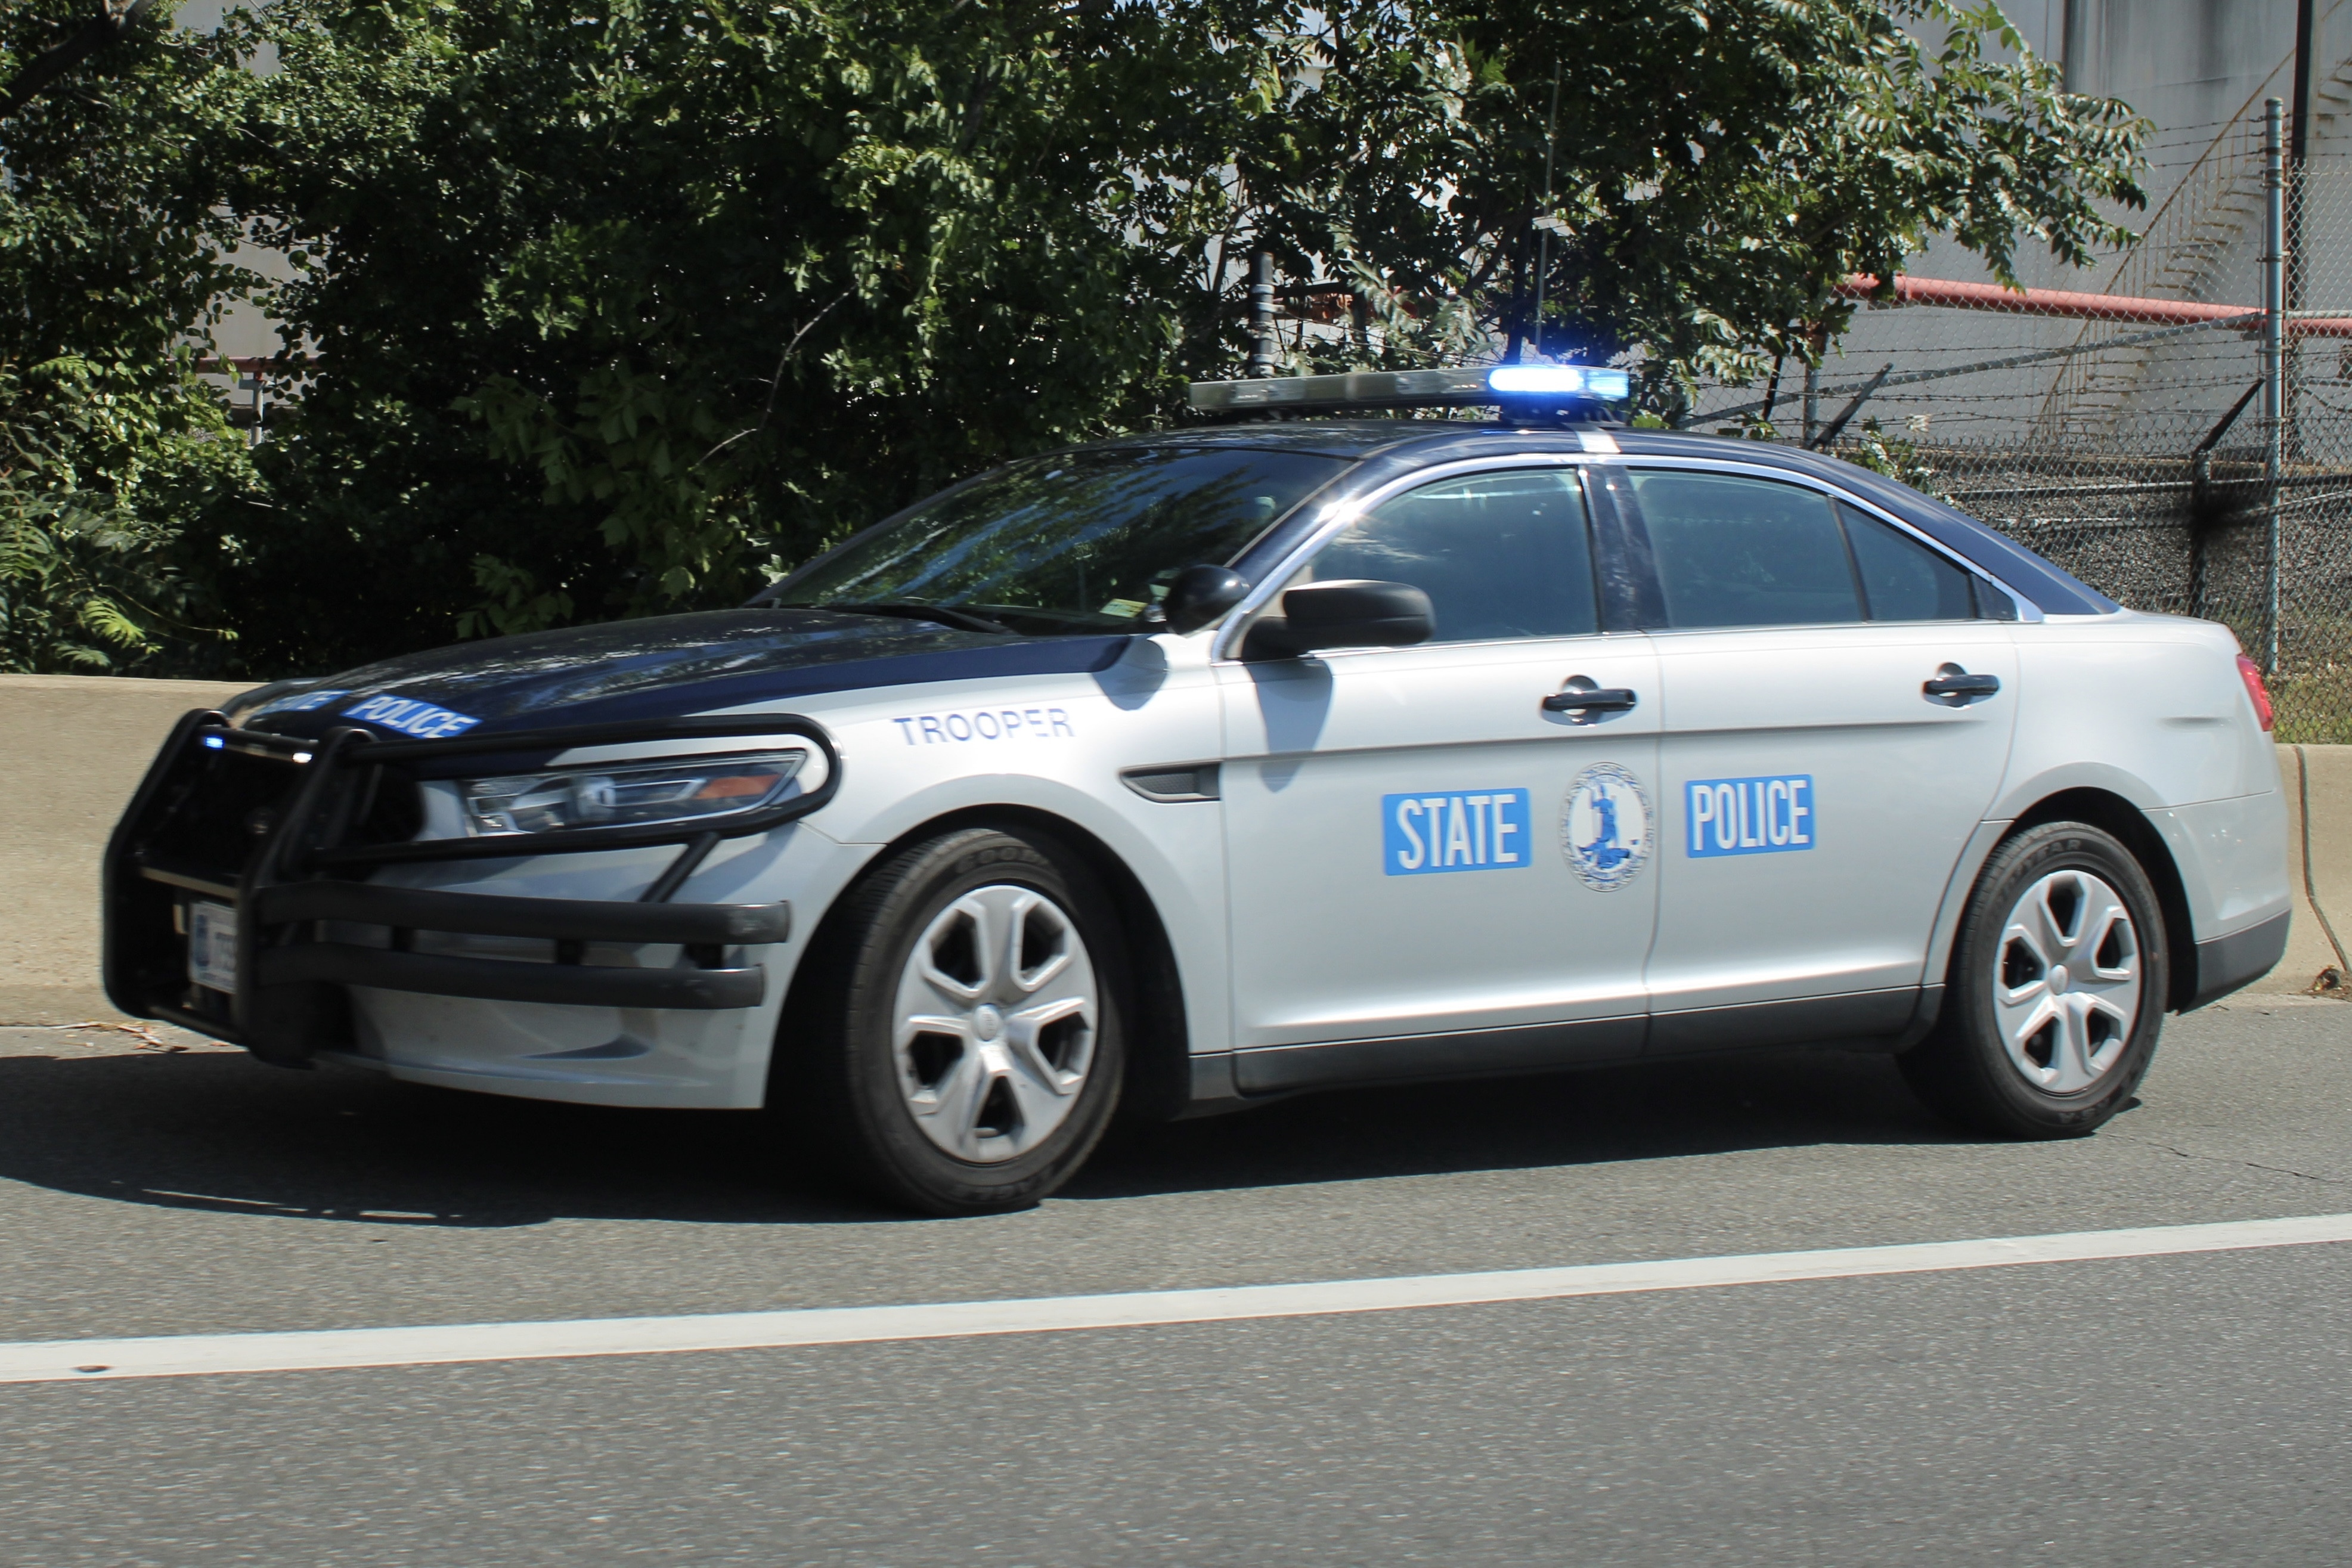 A photo  of Virginia State Police
            Cruiser 7599, a 2018 Ford Police Interceptor Sedan             taken by @riemergencyvehicles